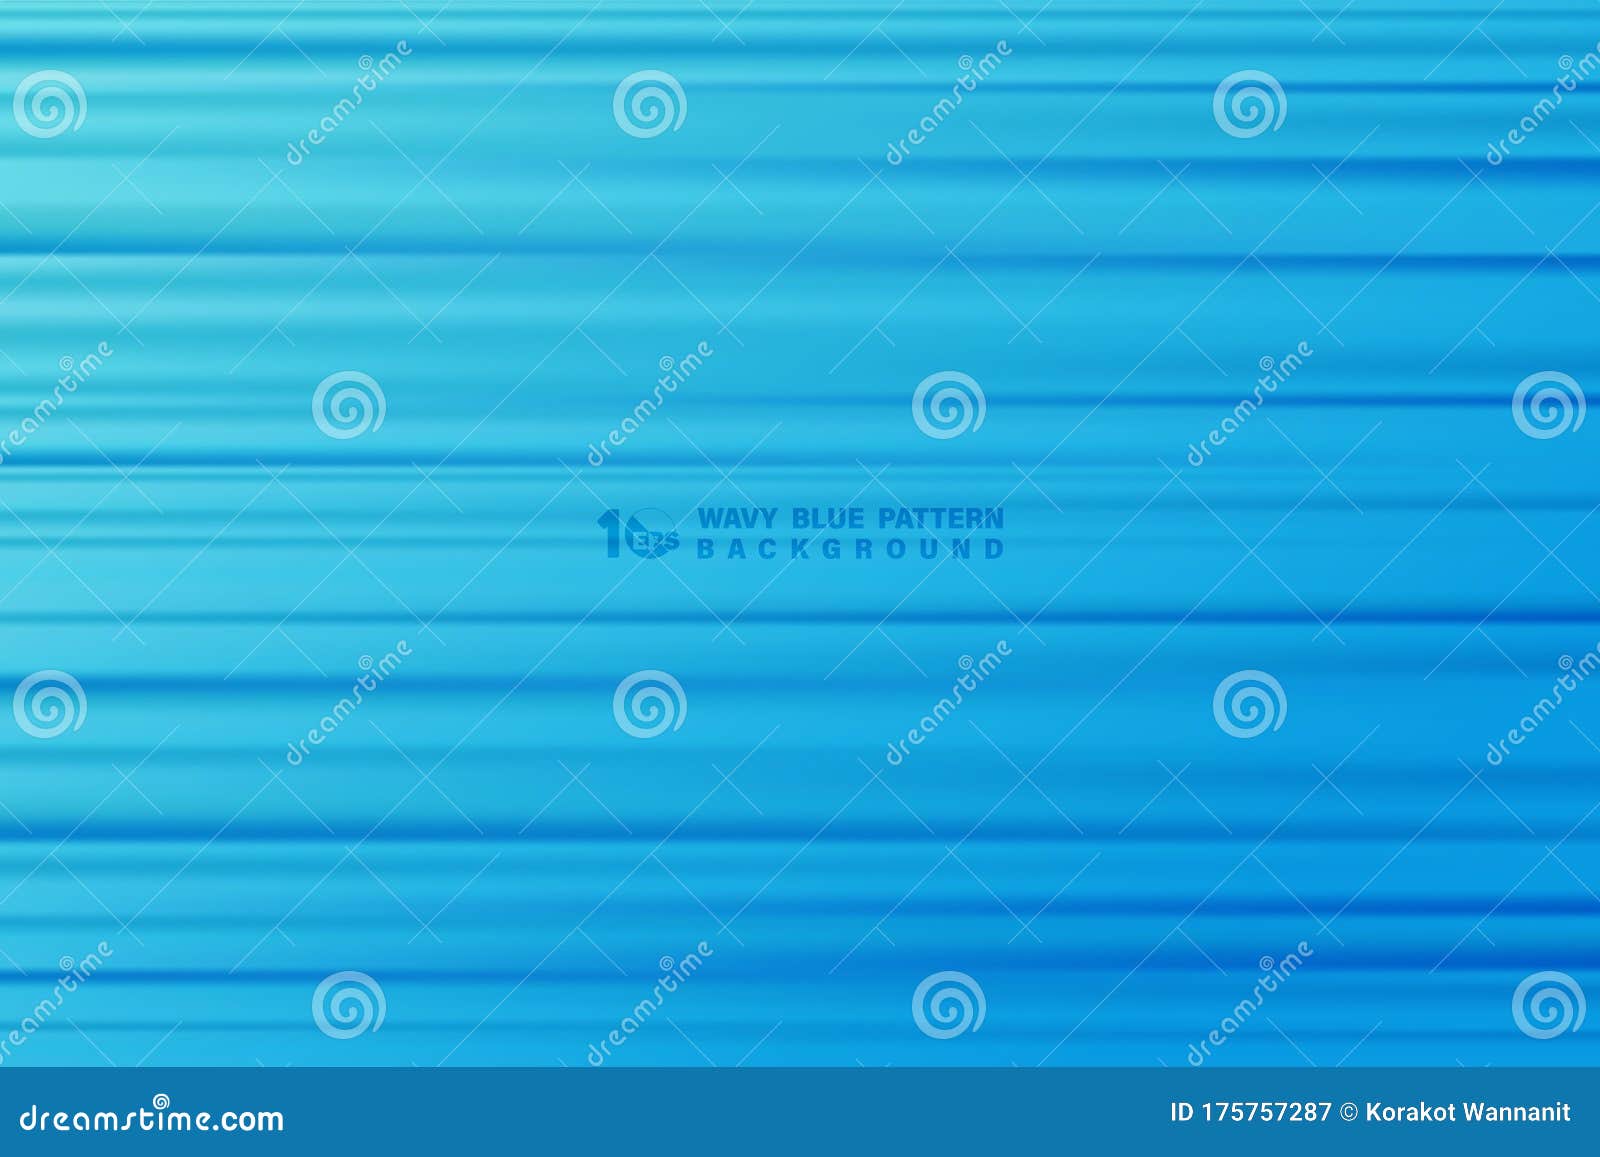 Abstract Blue Wavy Stripe Line Pattern Artwork Background. Illustration ...